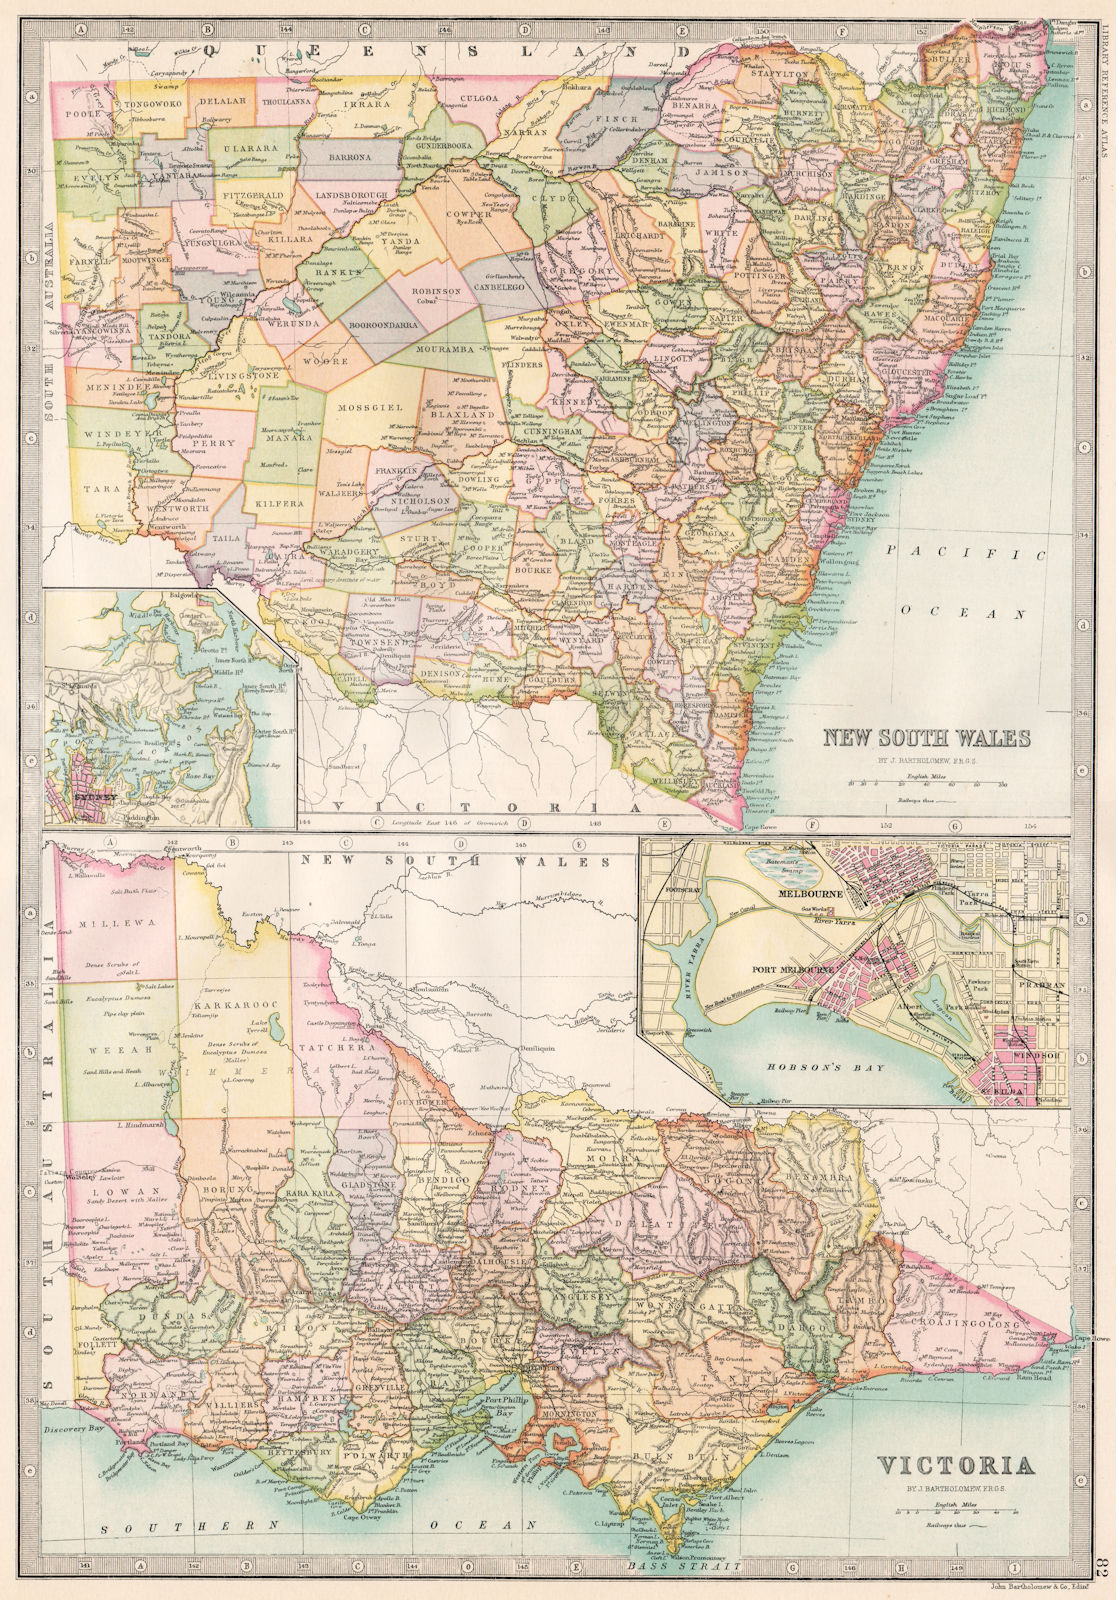 Associate Product AUSTRALIA. New South Wales; Victoria; inset Melbourne. BARTHOLOMEW 1890 map